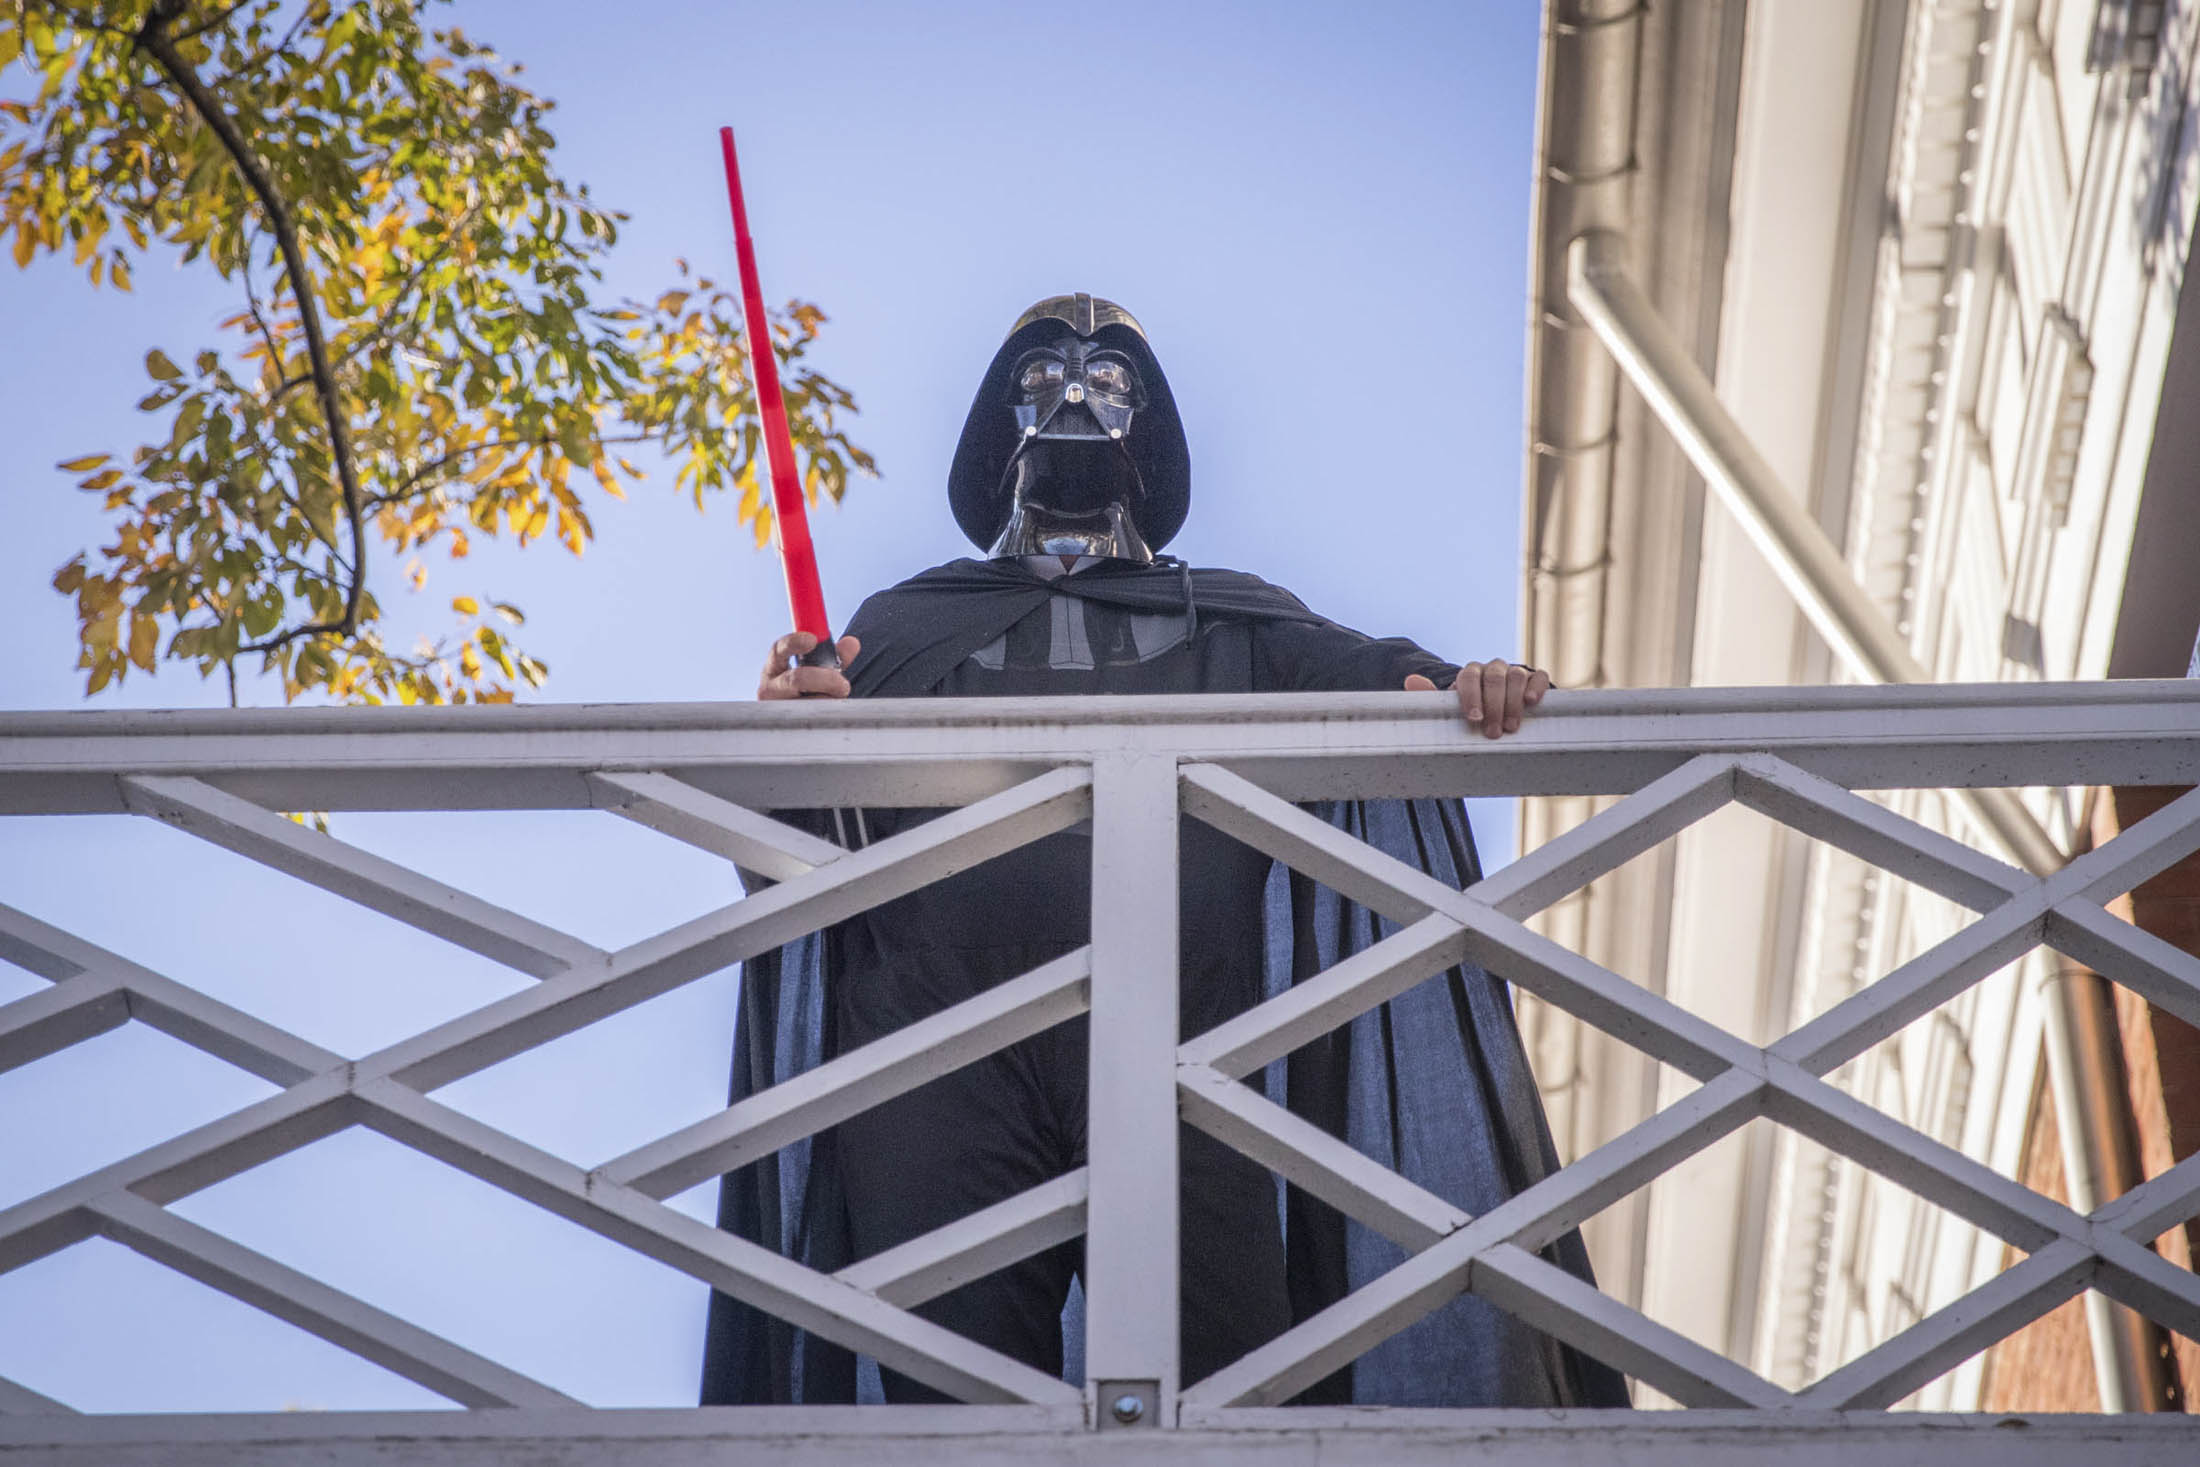 Darth Vader standing on the Rotunda patio